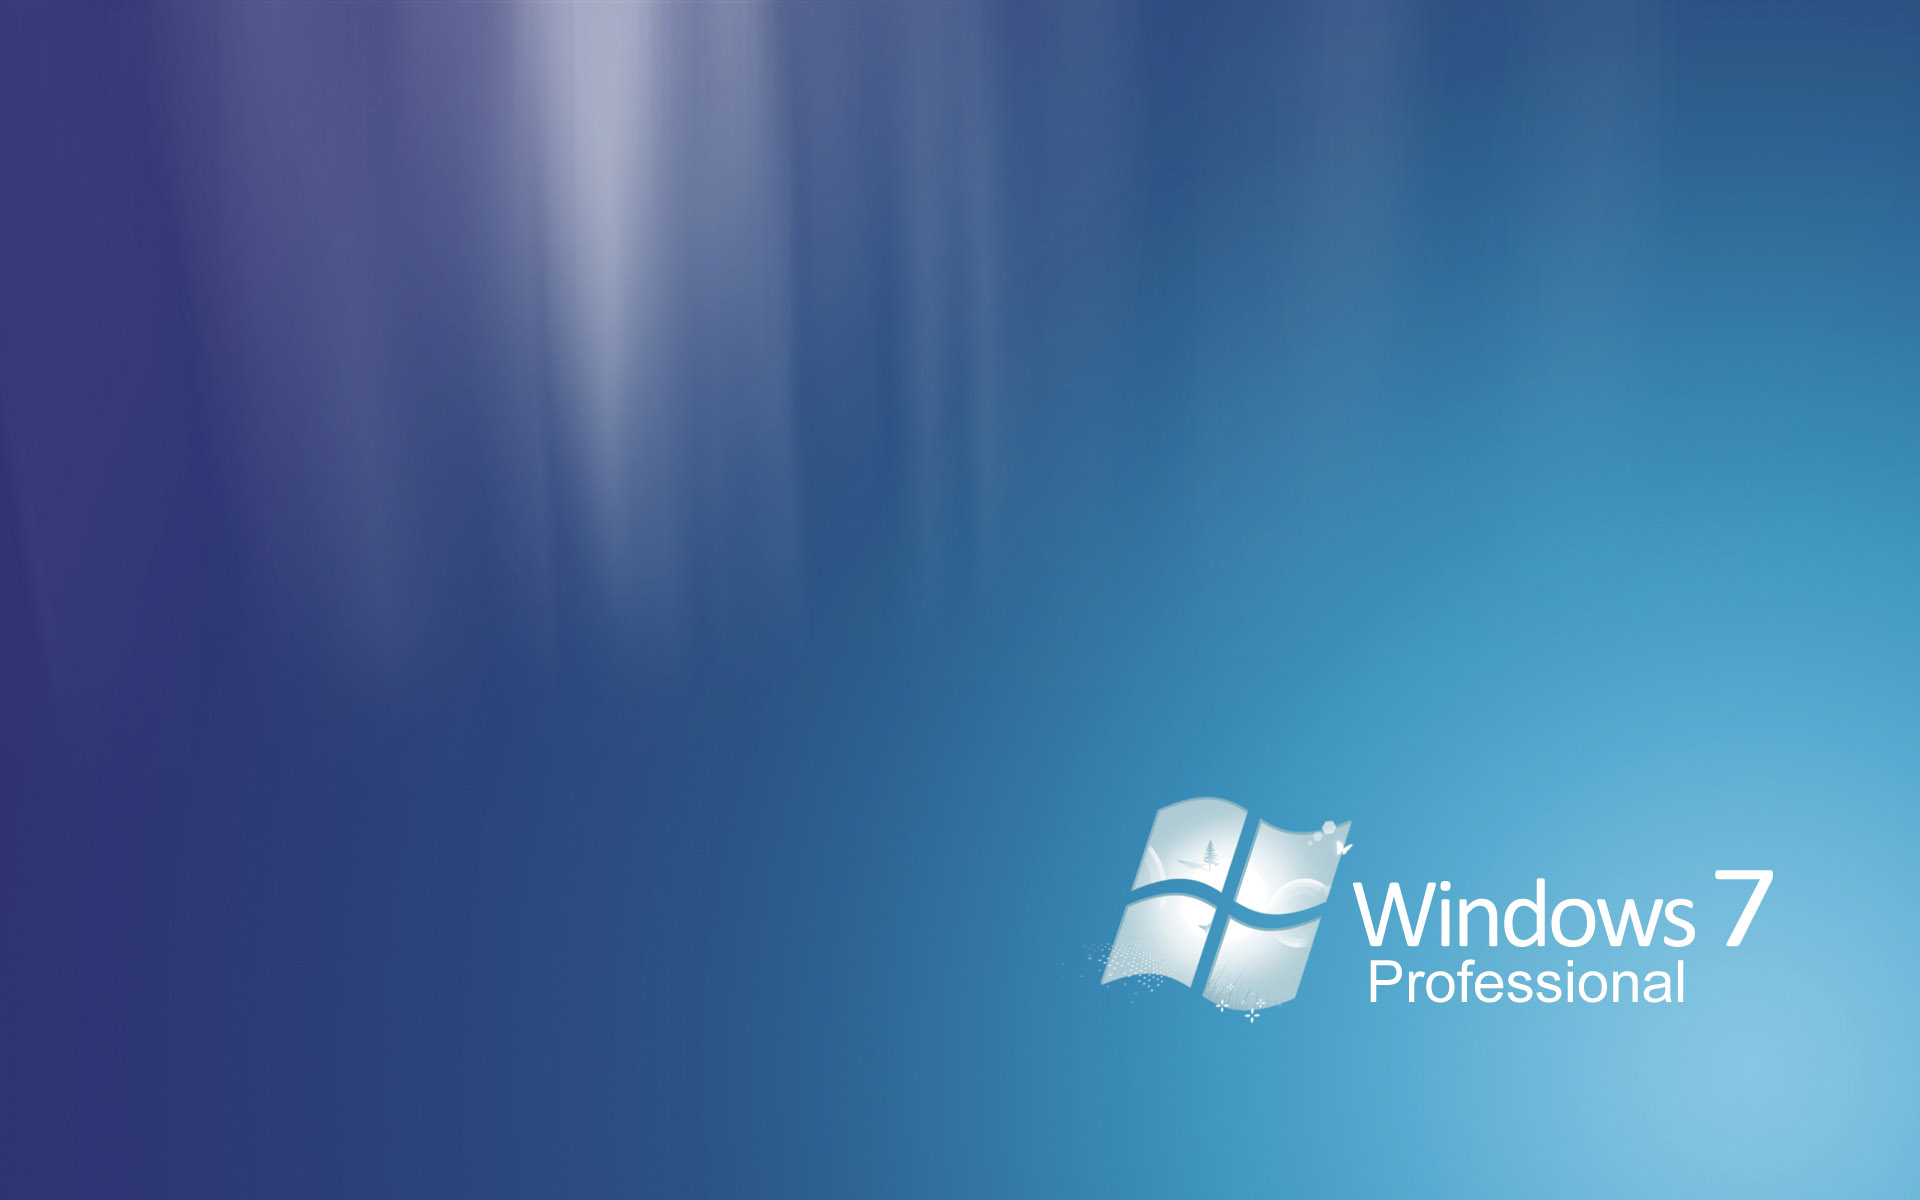 Windows 7 Hd Wallpaper Background Image 19x10 Id Wallpaper Abyss